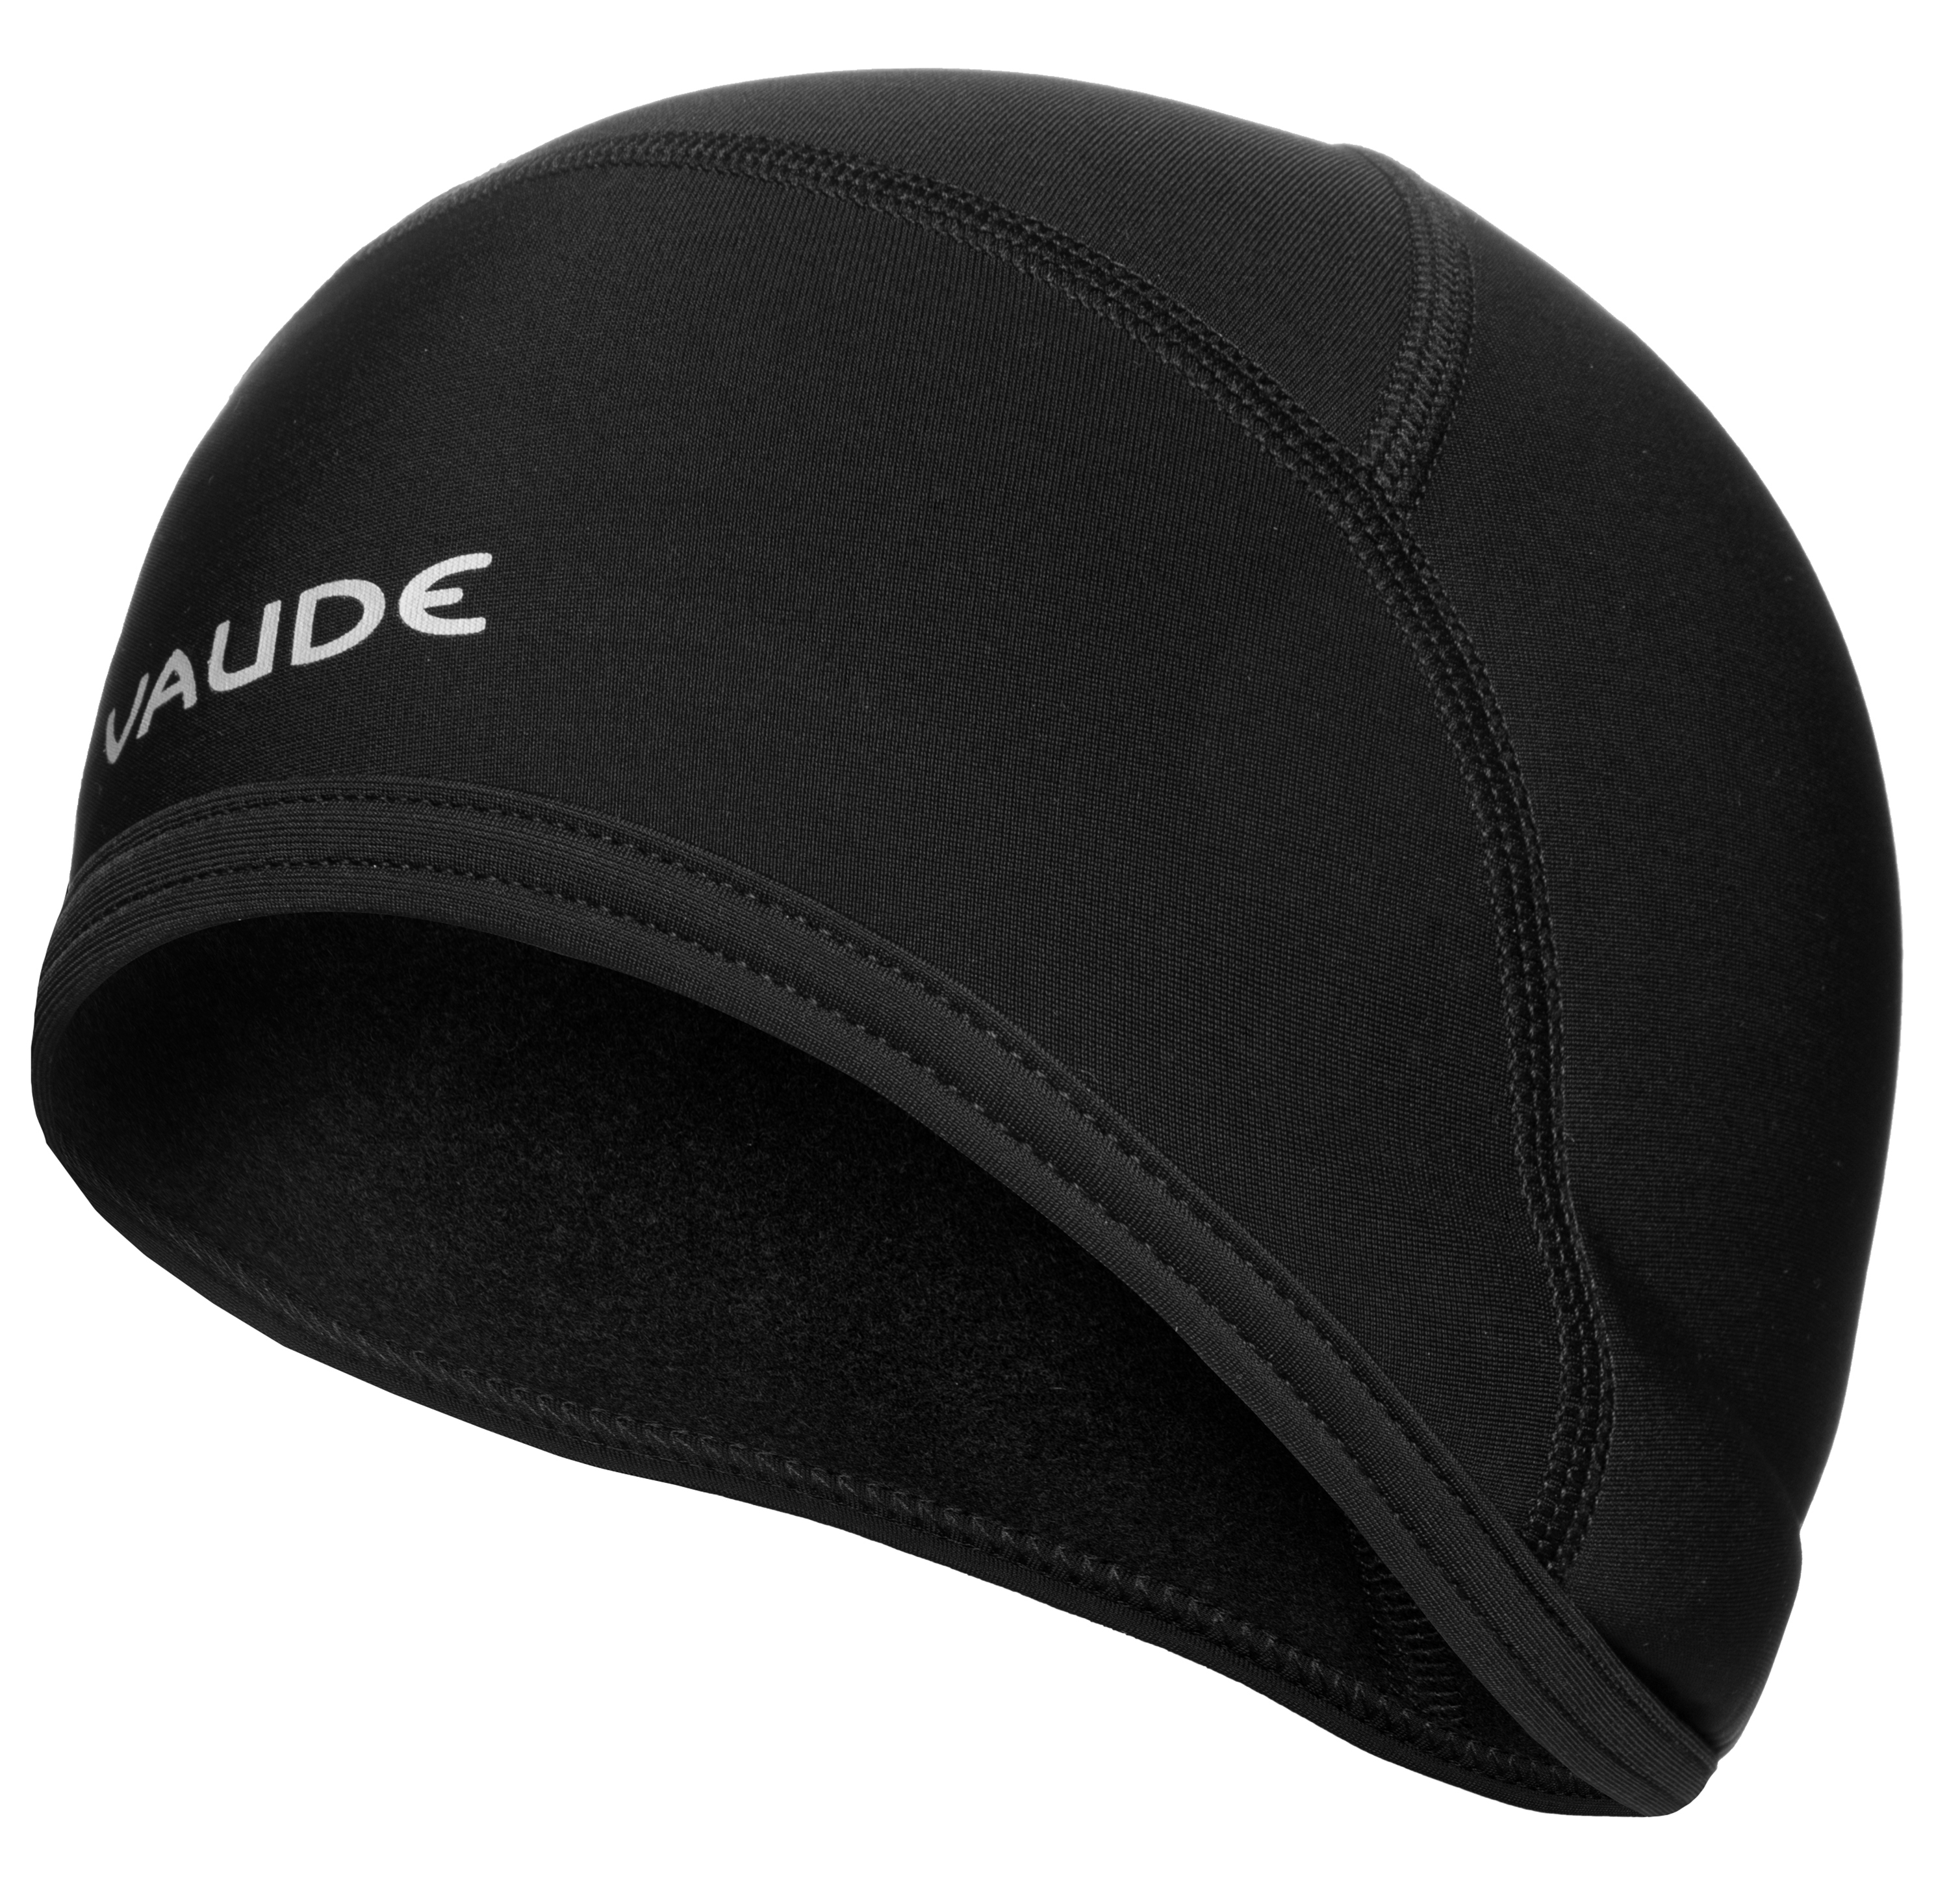 VAUDE Bike Warm Cap / black/white / Uni / S / 2022